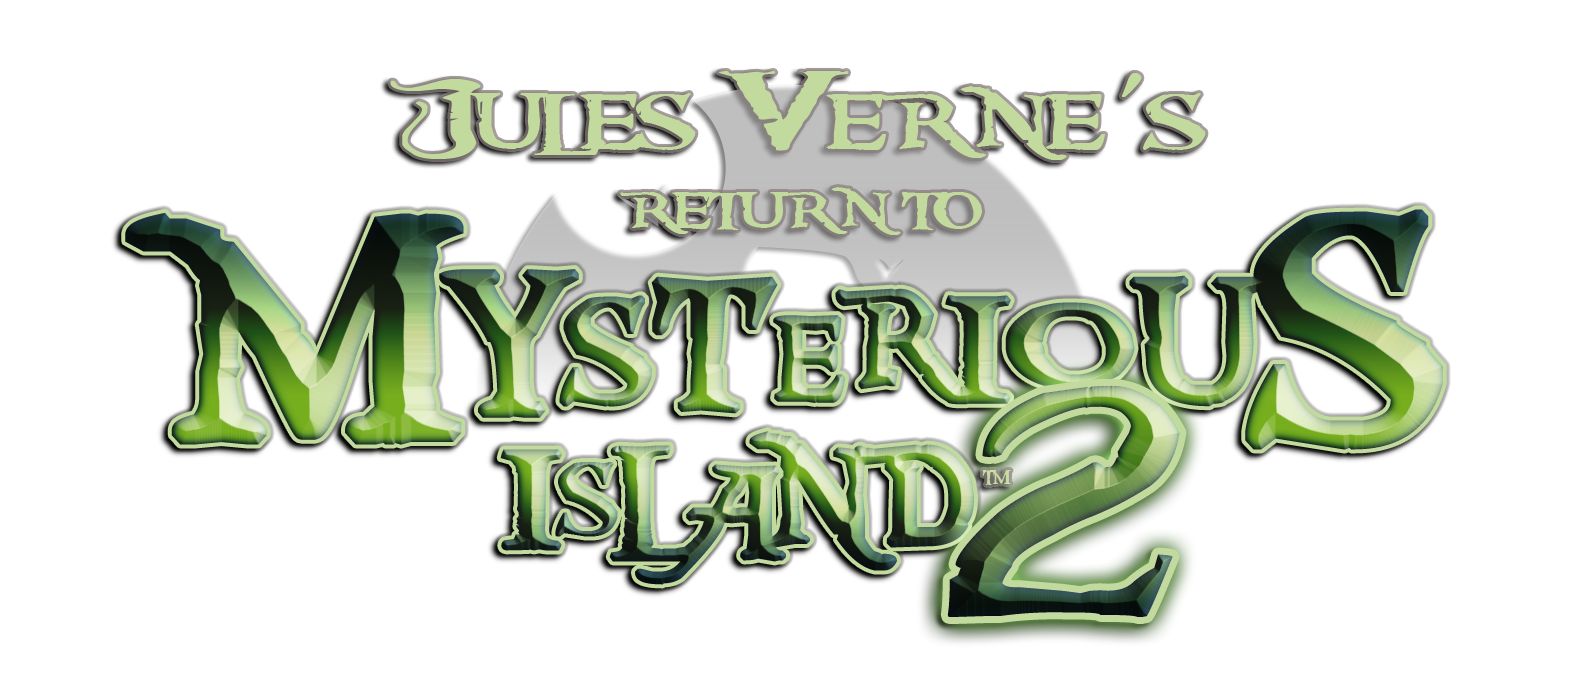 Jule-Vernes-Return-to-Mysteriou-Island-2-Logo-01